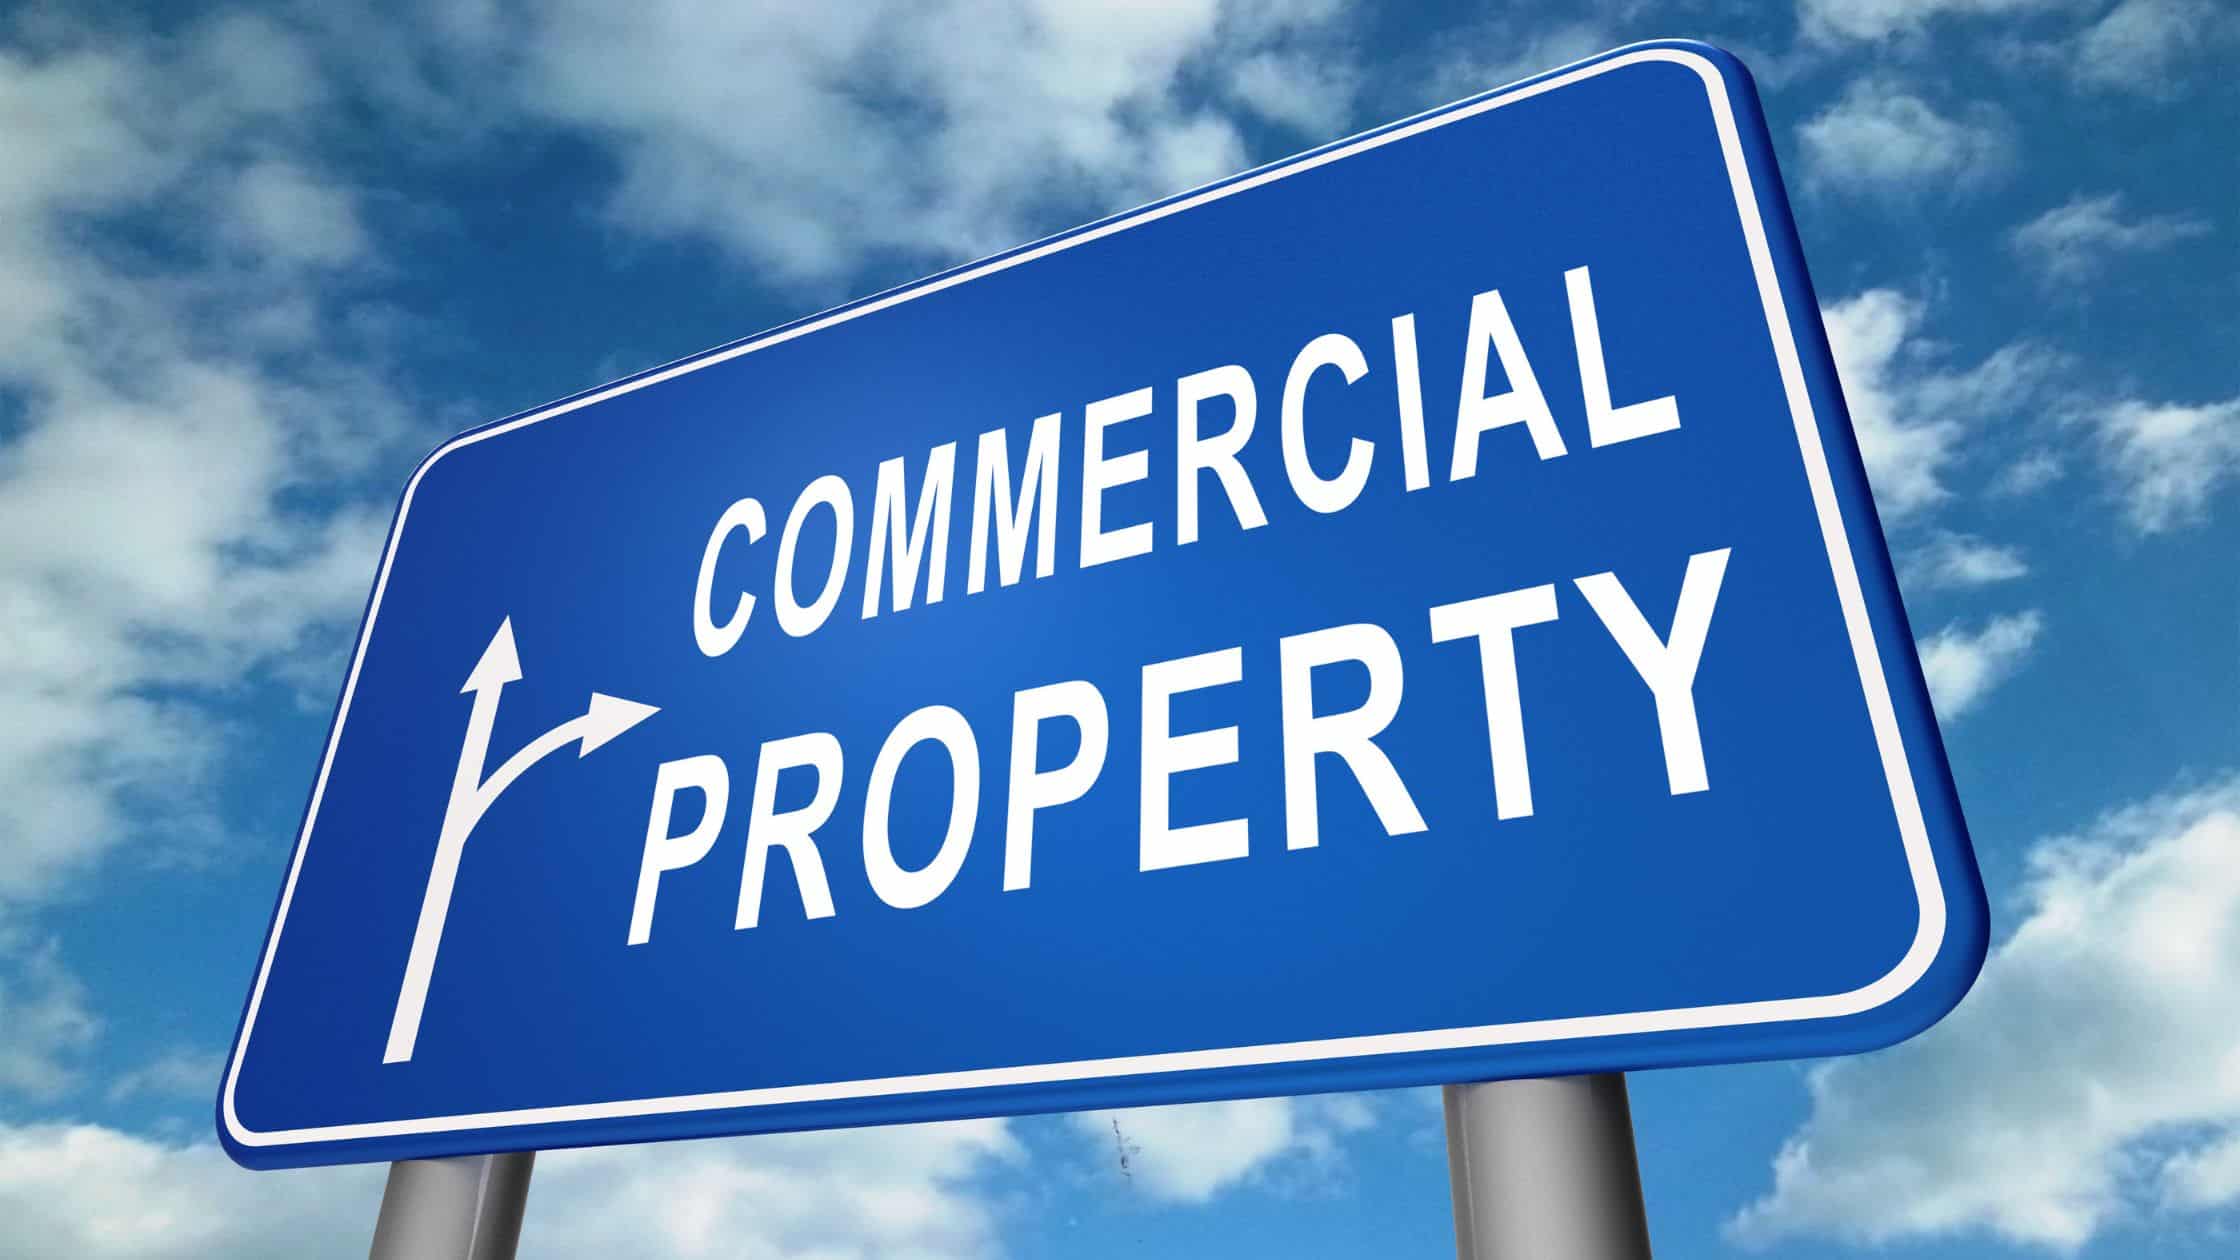 Pune commercial property investment tips- blog banner-image- jpg-2240 by 1260 pixels